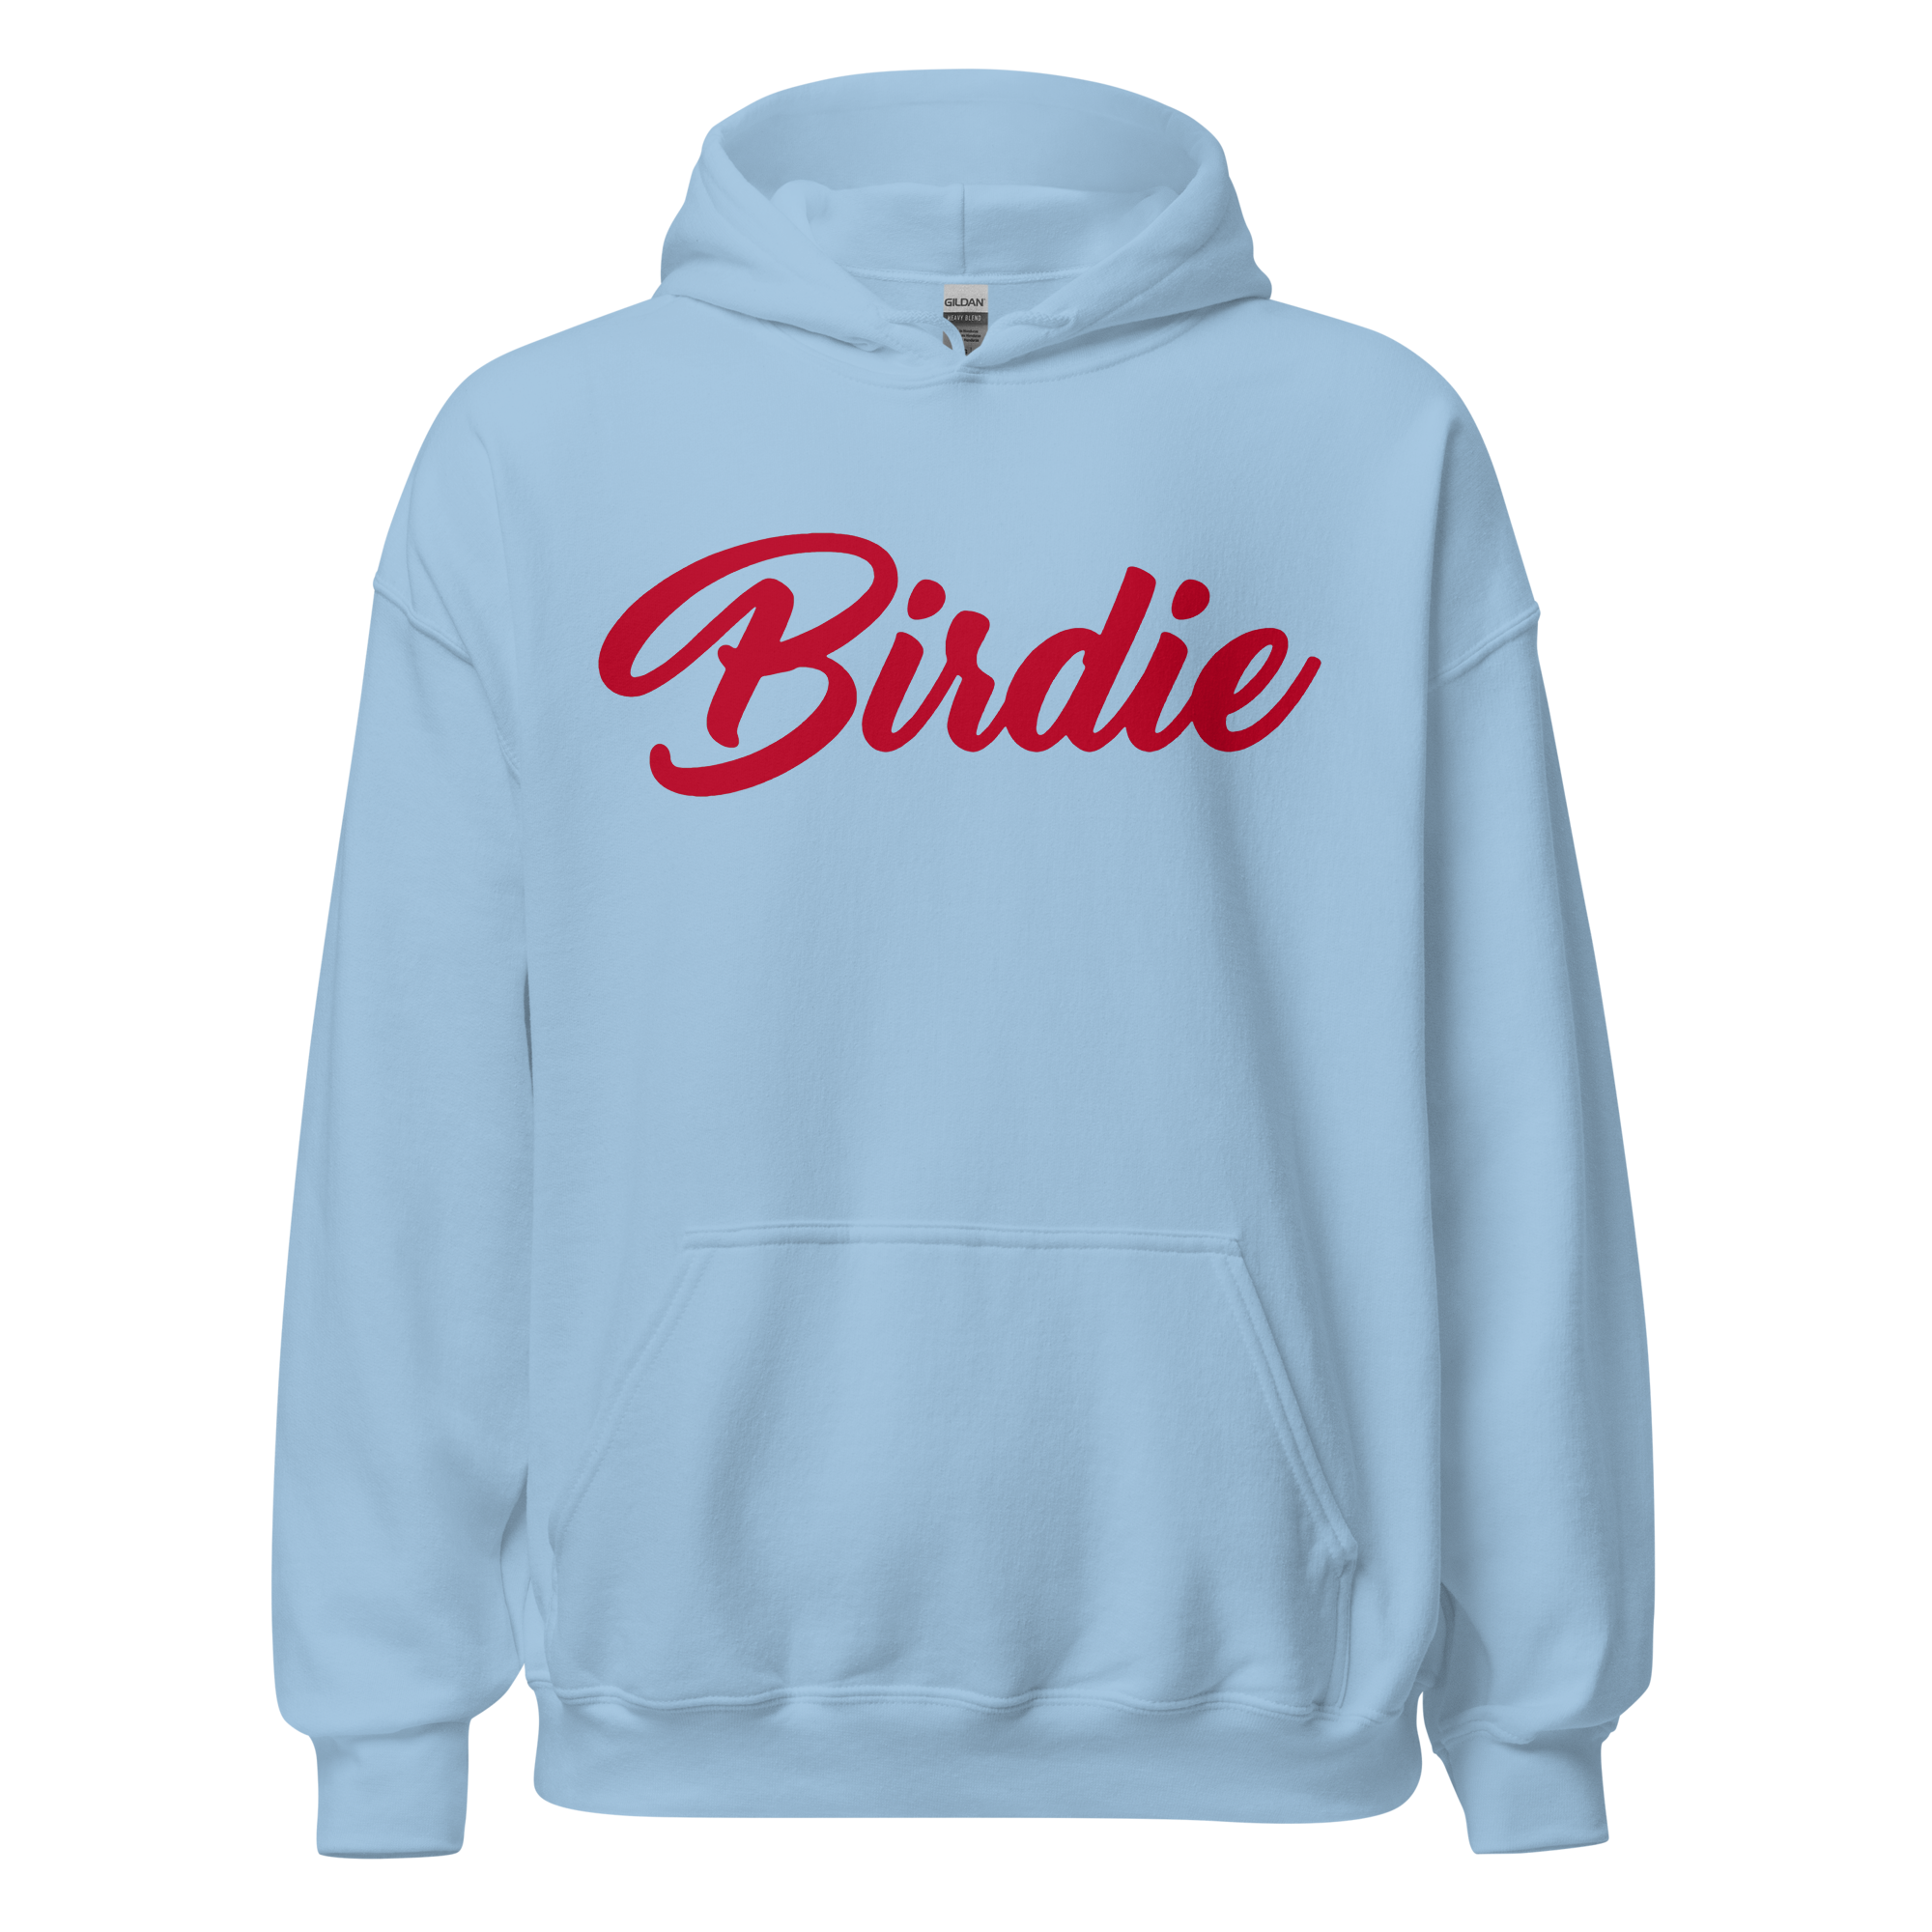 Birdie Threads Hoodie - Light Blue / Red